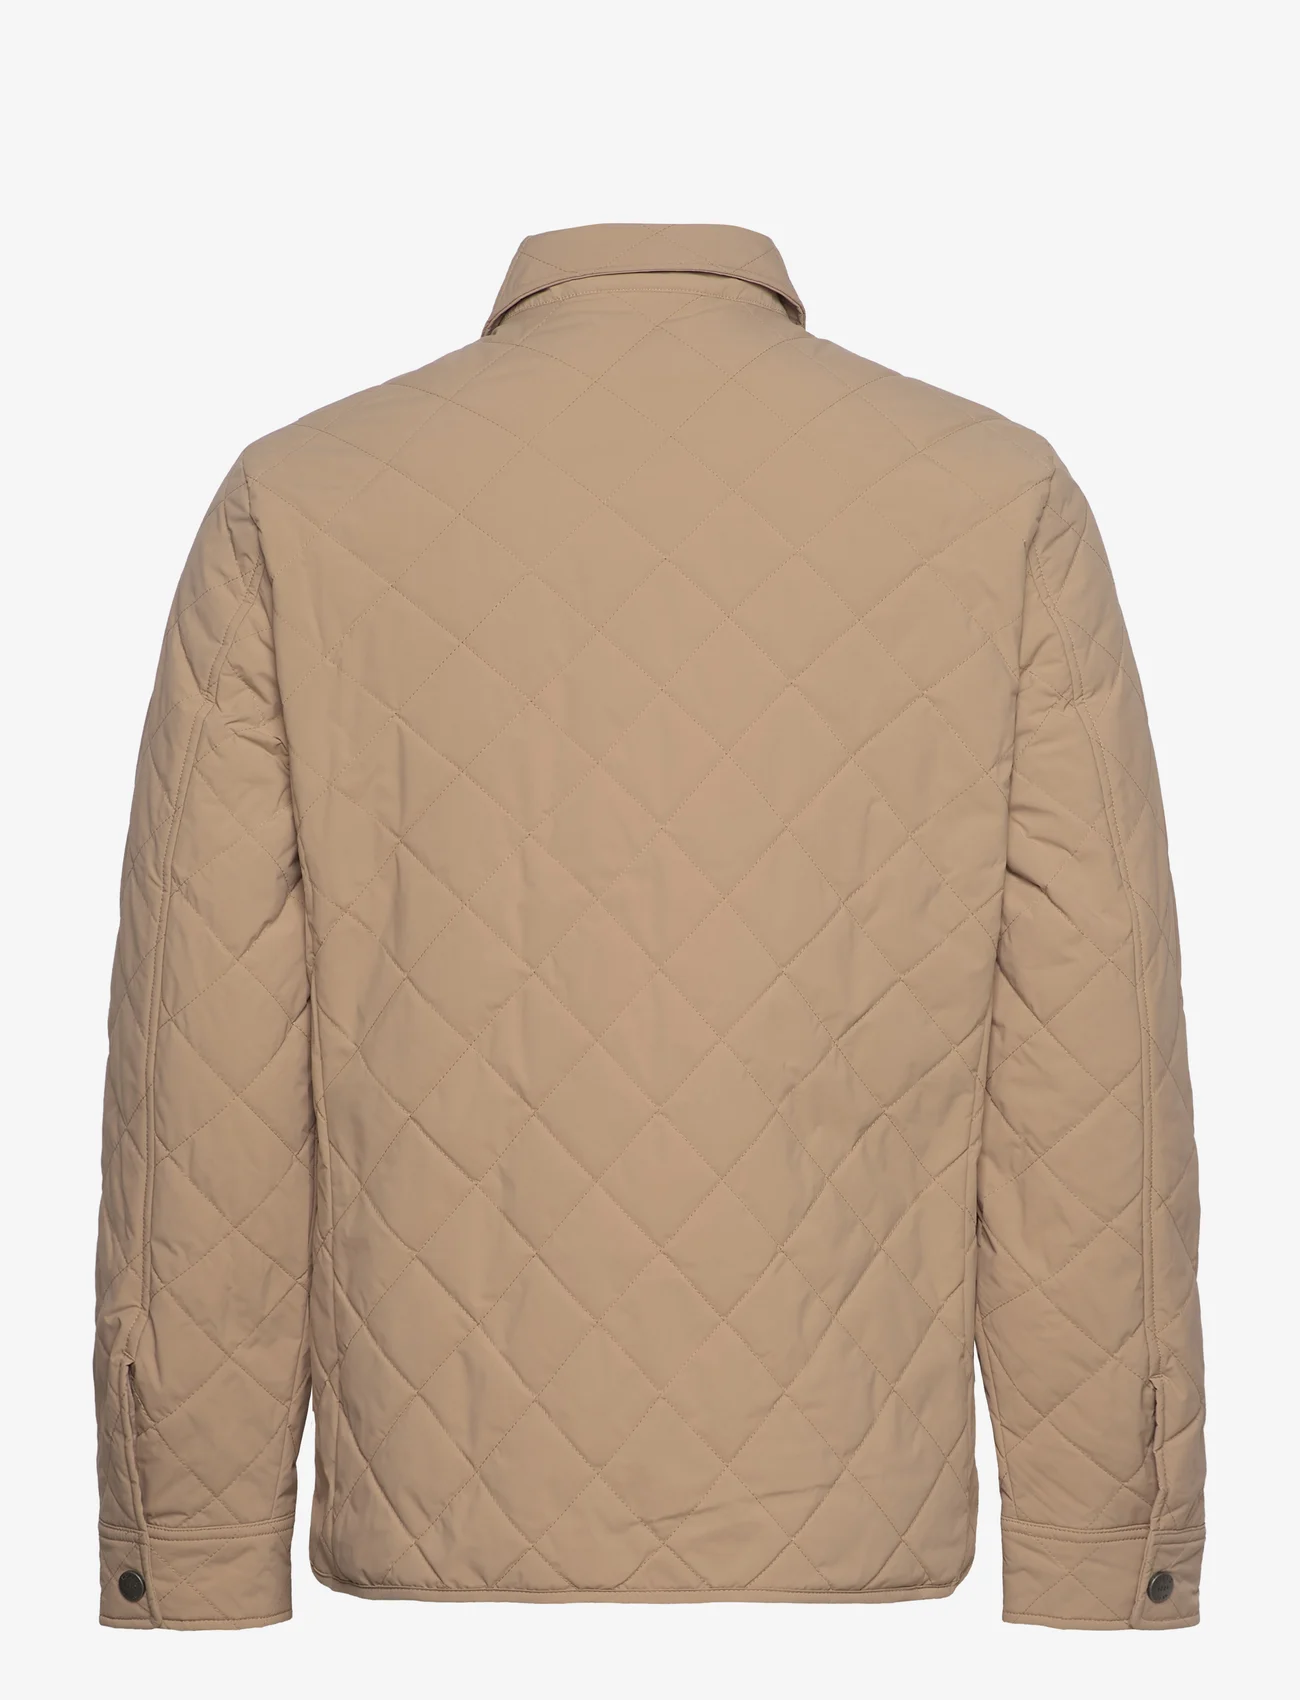 Morris - Dunhamn Jacket - spring jackets - camel - 1